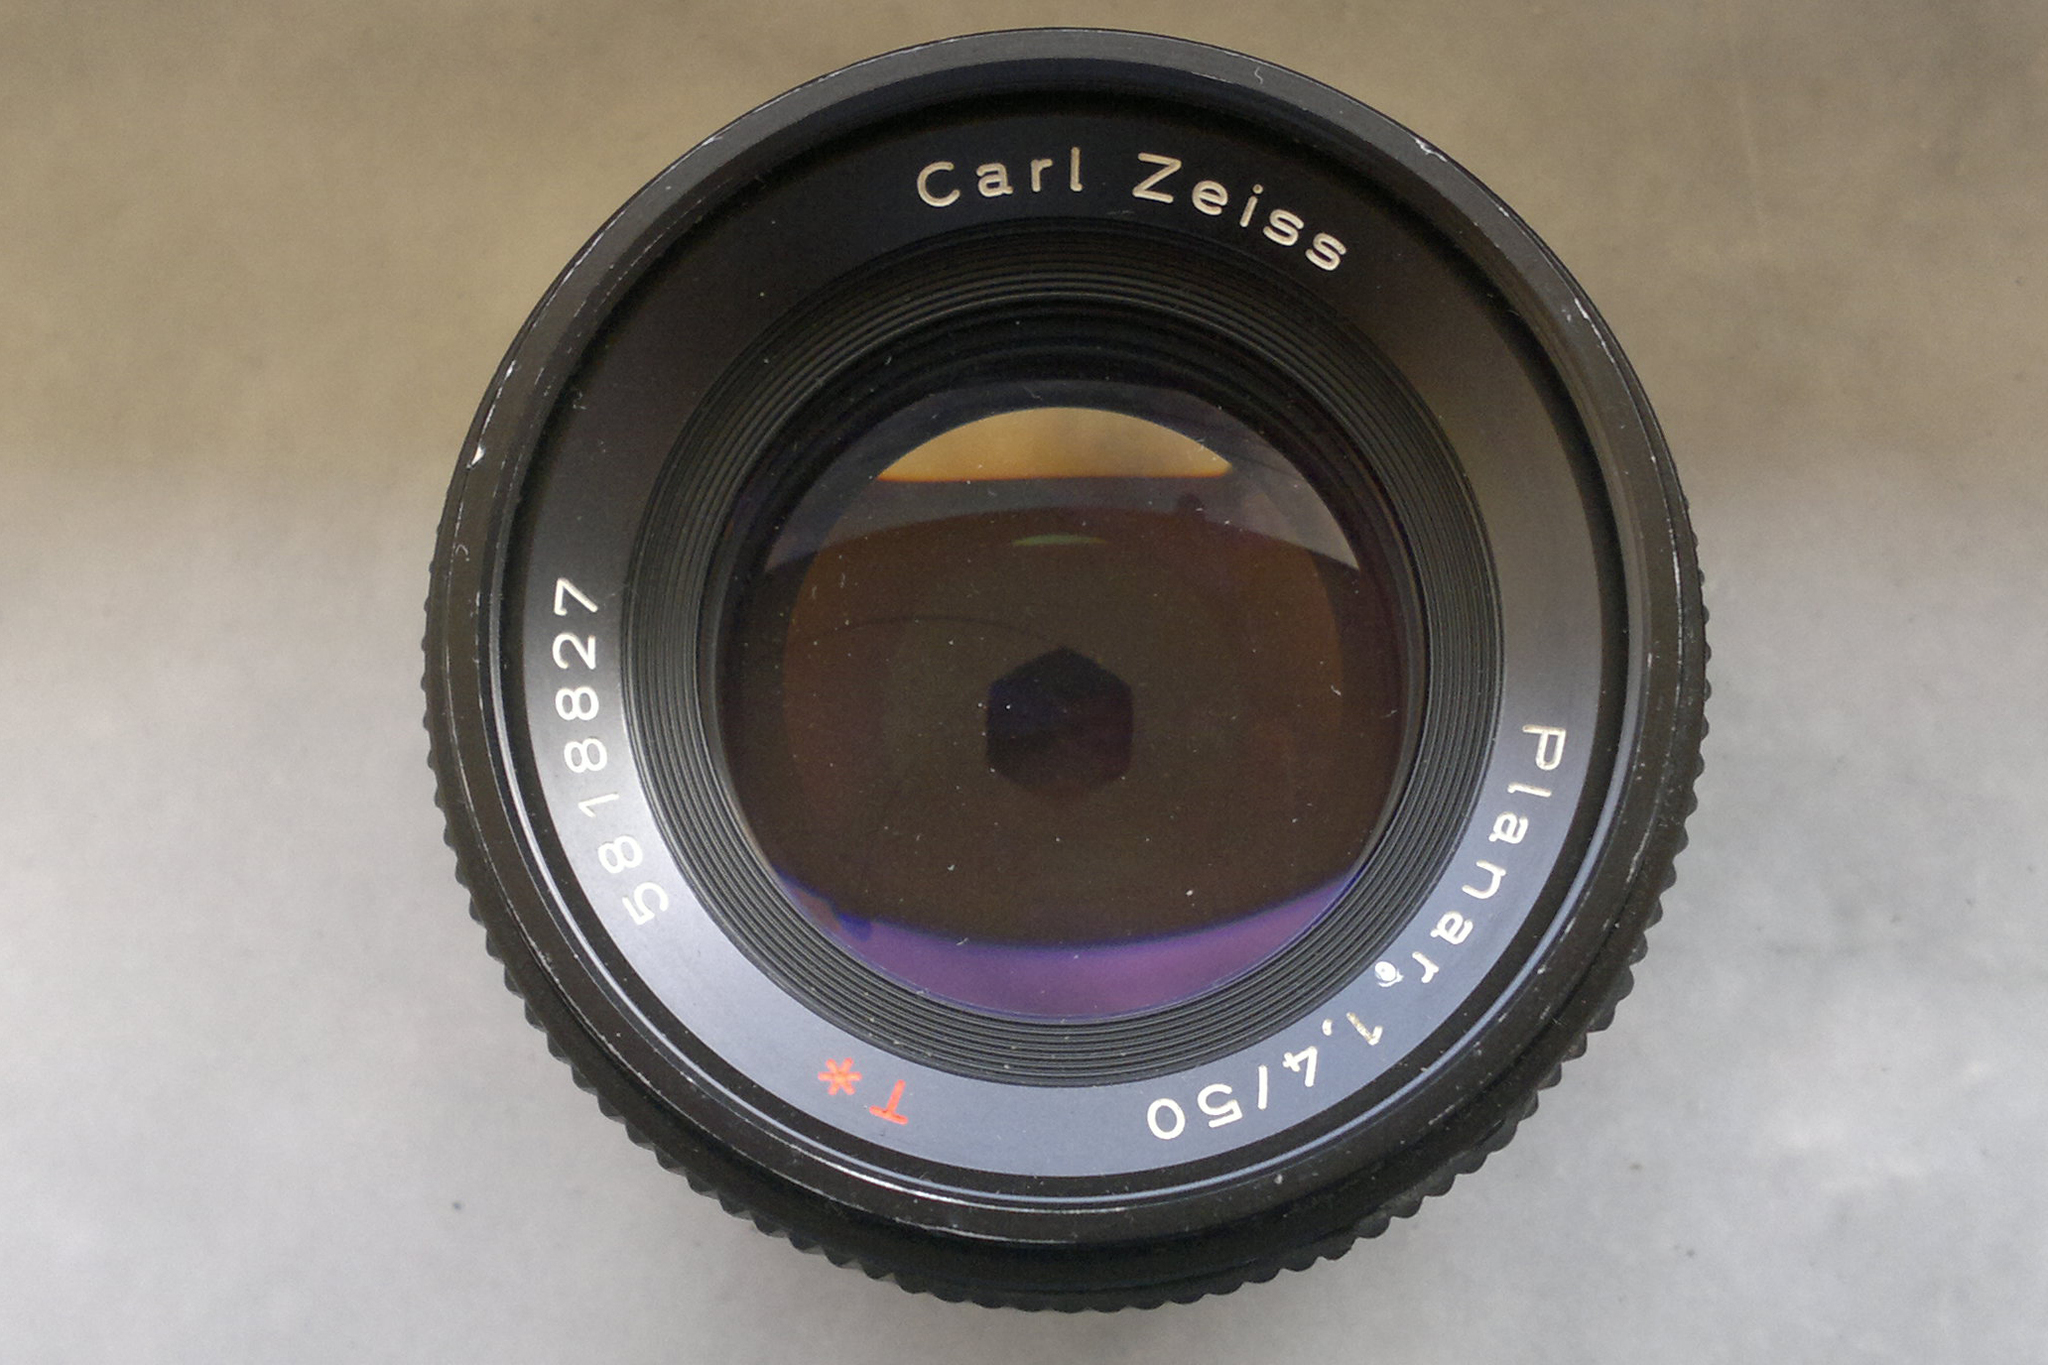  Carl Zeiss Planar T 50 mm 1.4